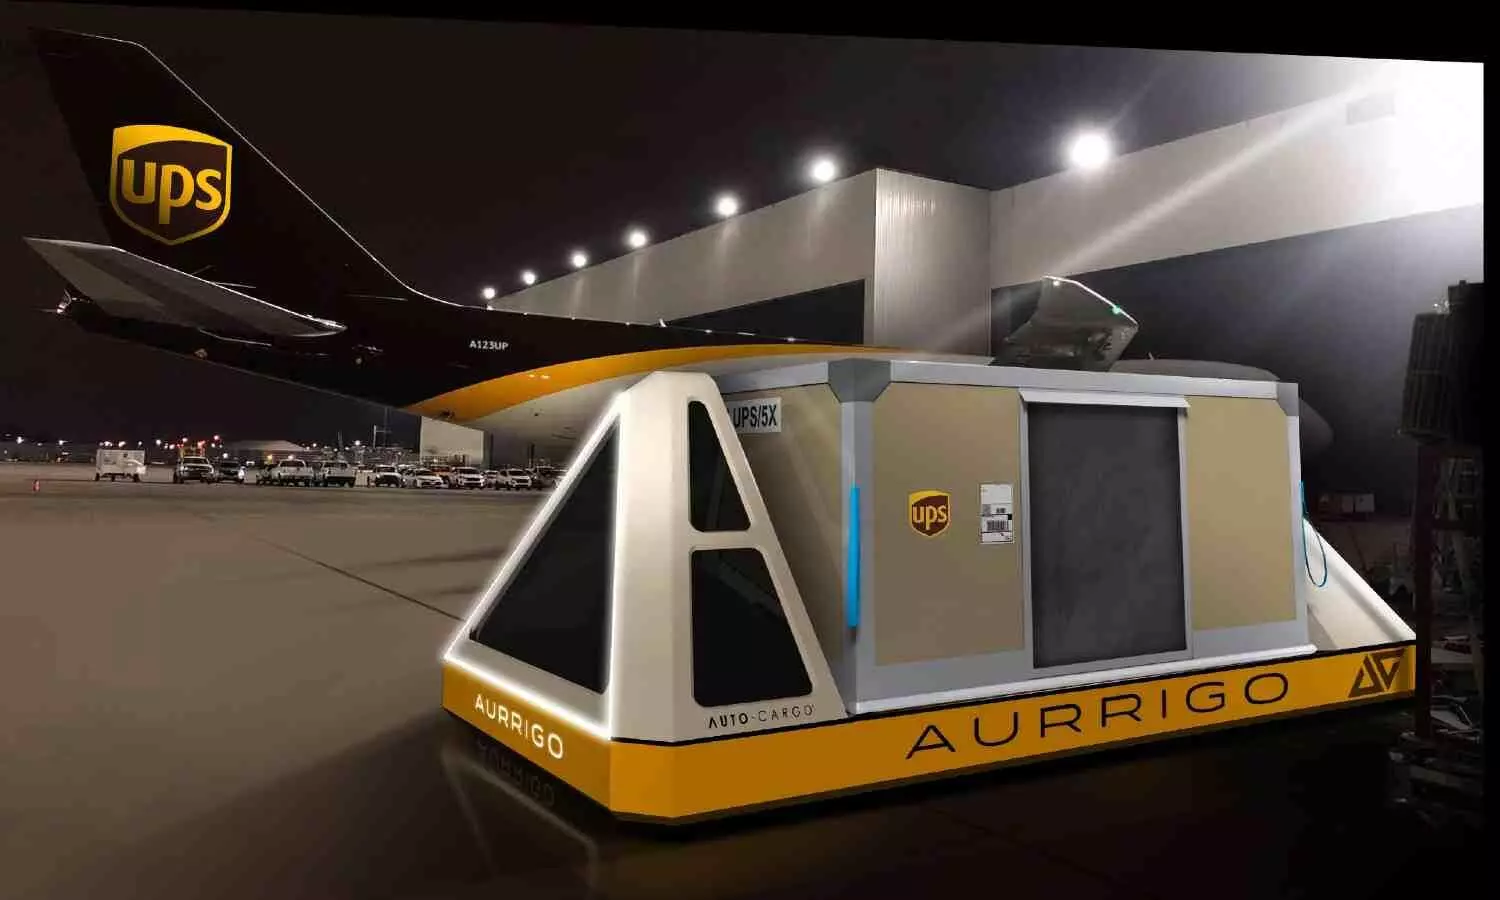 Aurrigo, UPS partner for Auto-Cargo at East Midlands Airport